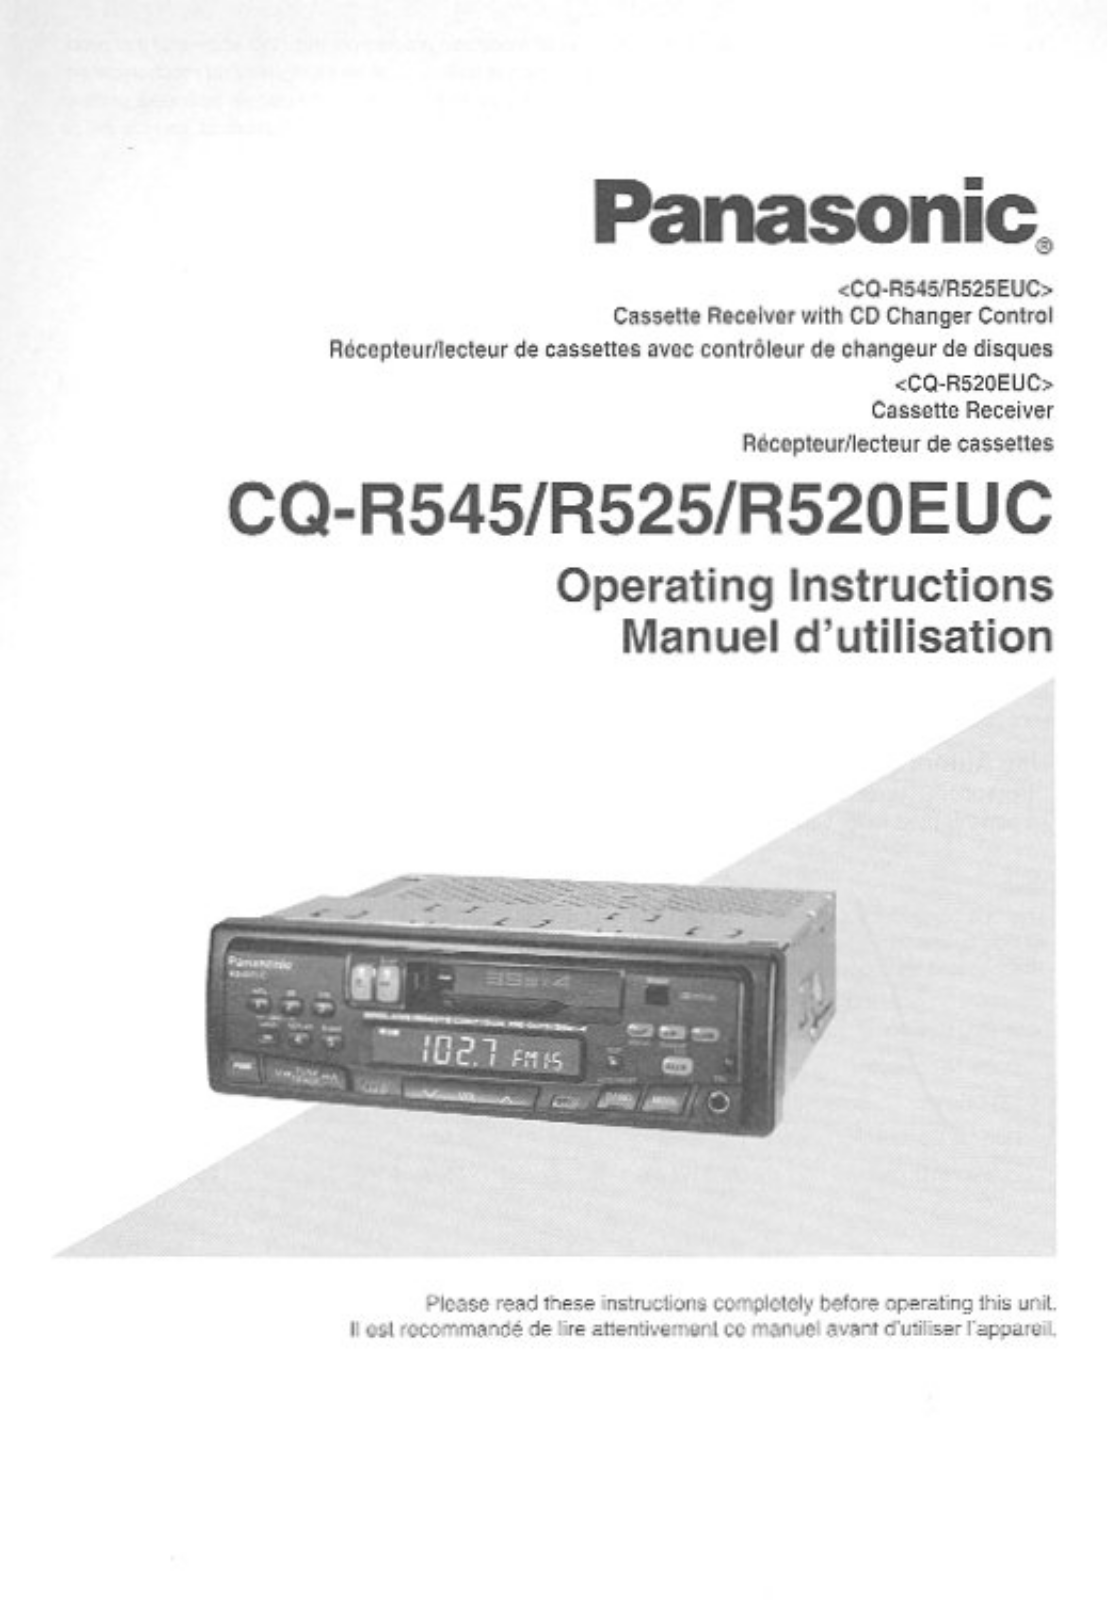 Panasonic cq-r545euc Operation Manual